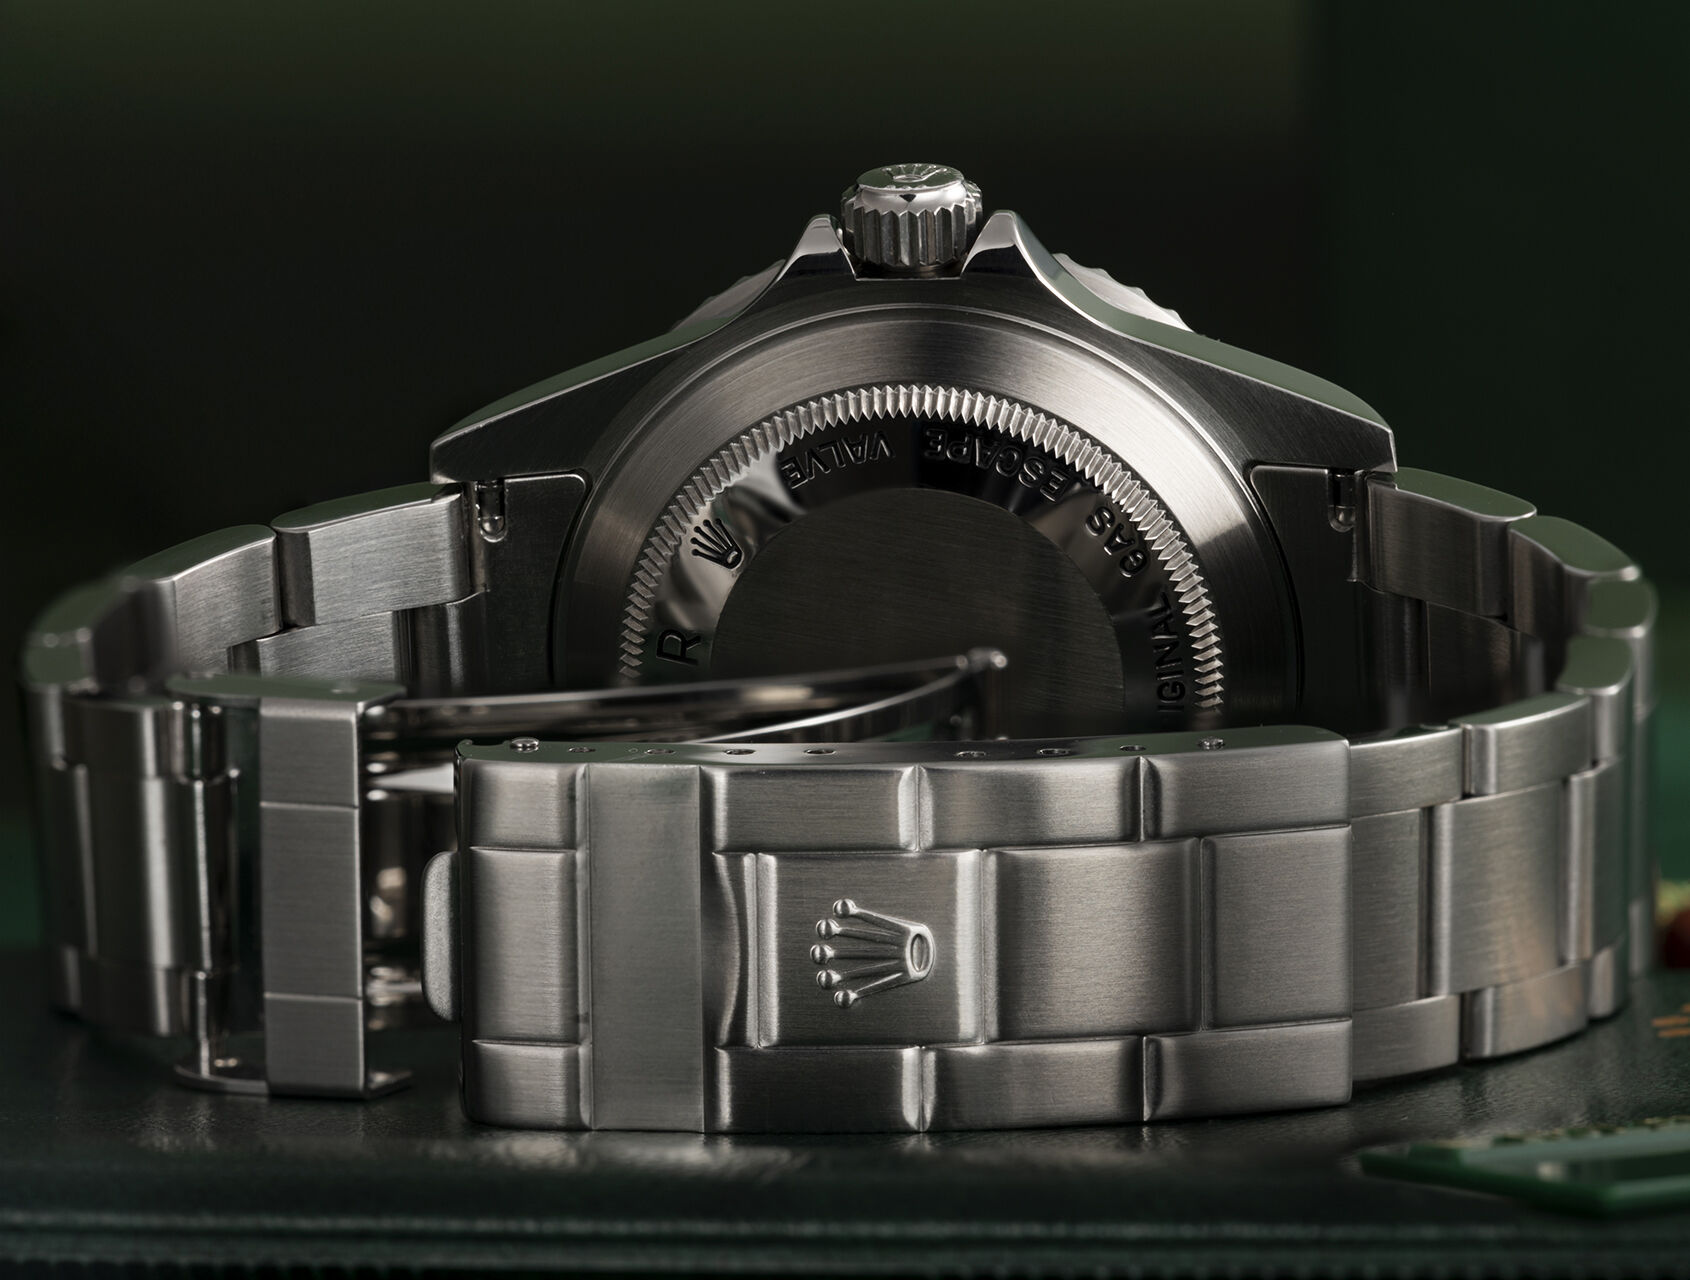 ref 16600 | 16600 - Aluminum Bezel | Rolex Sea-Dweller